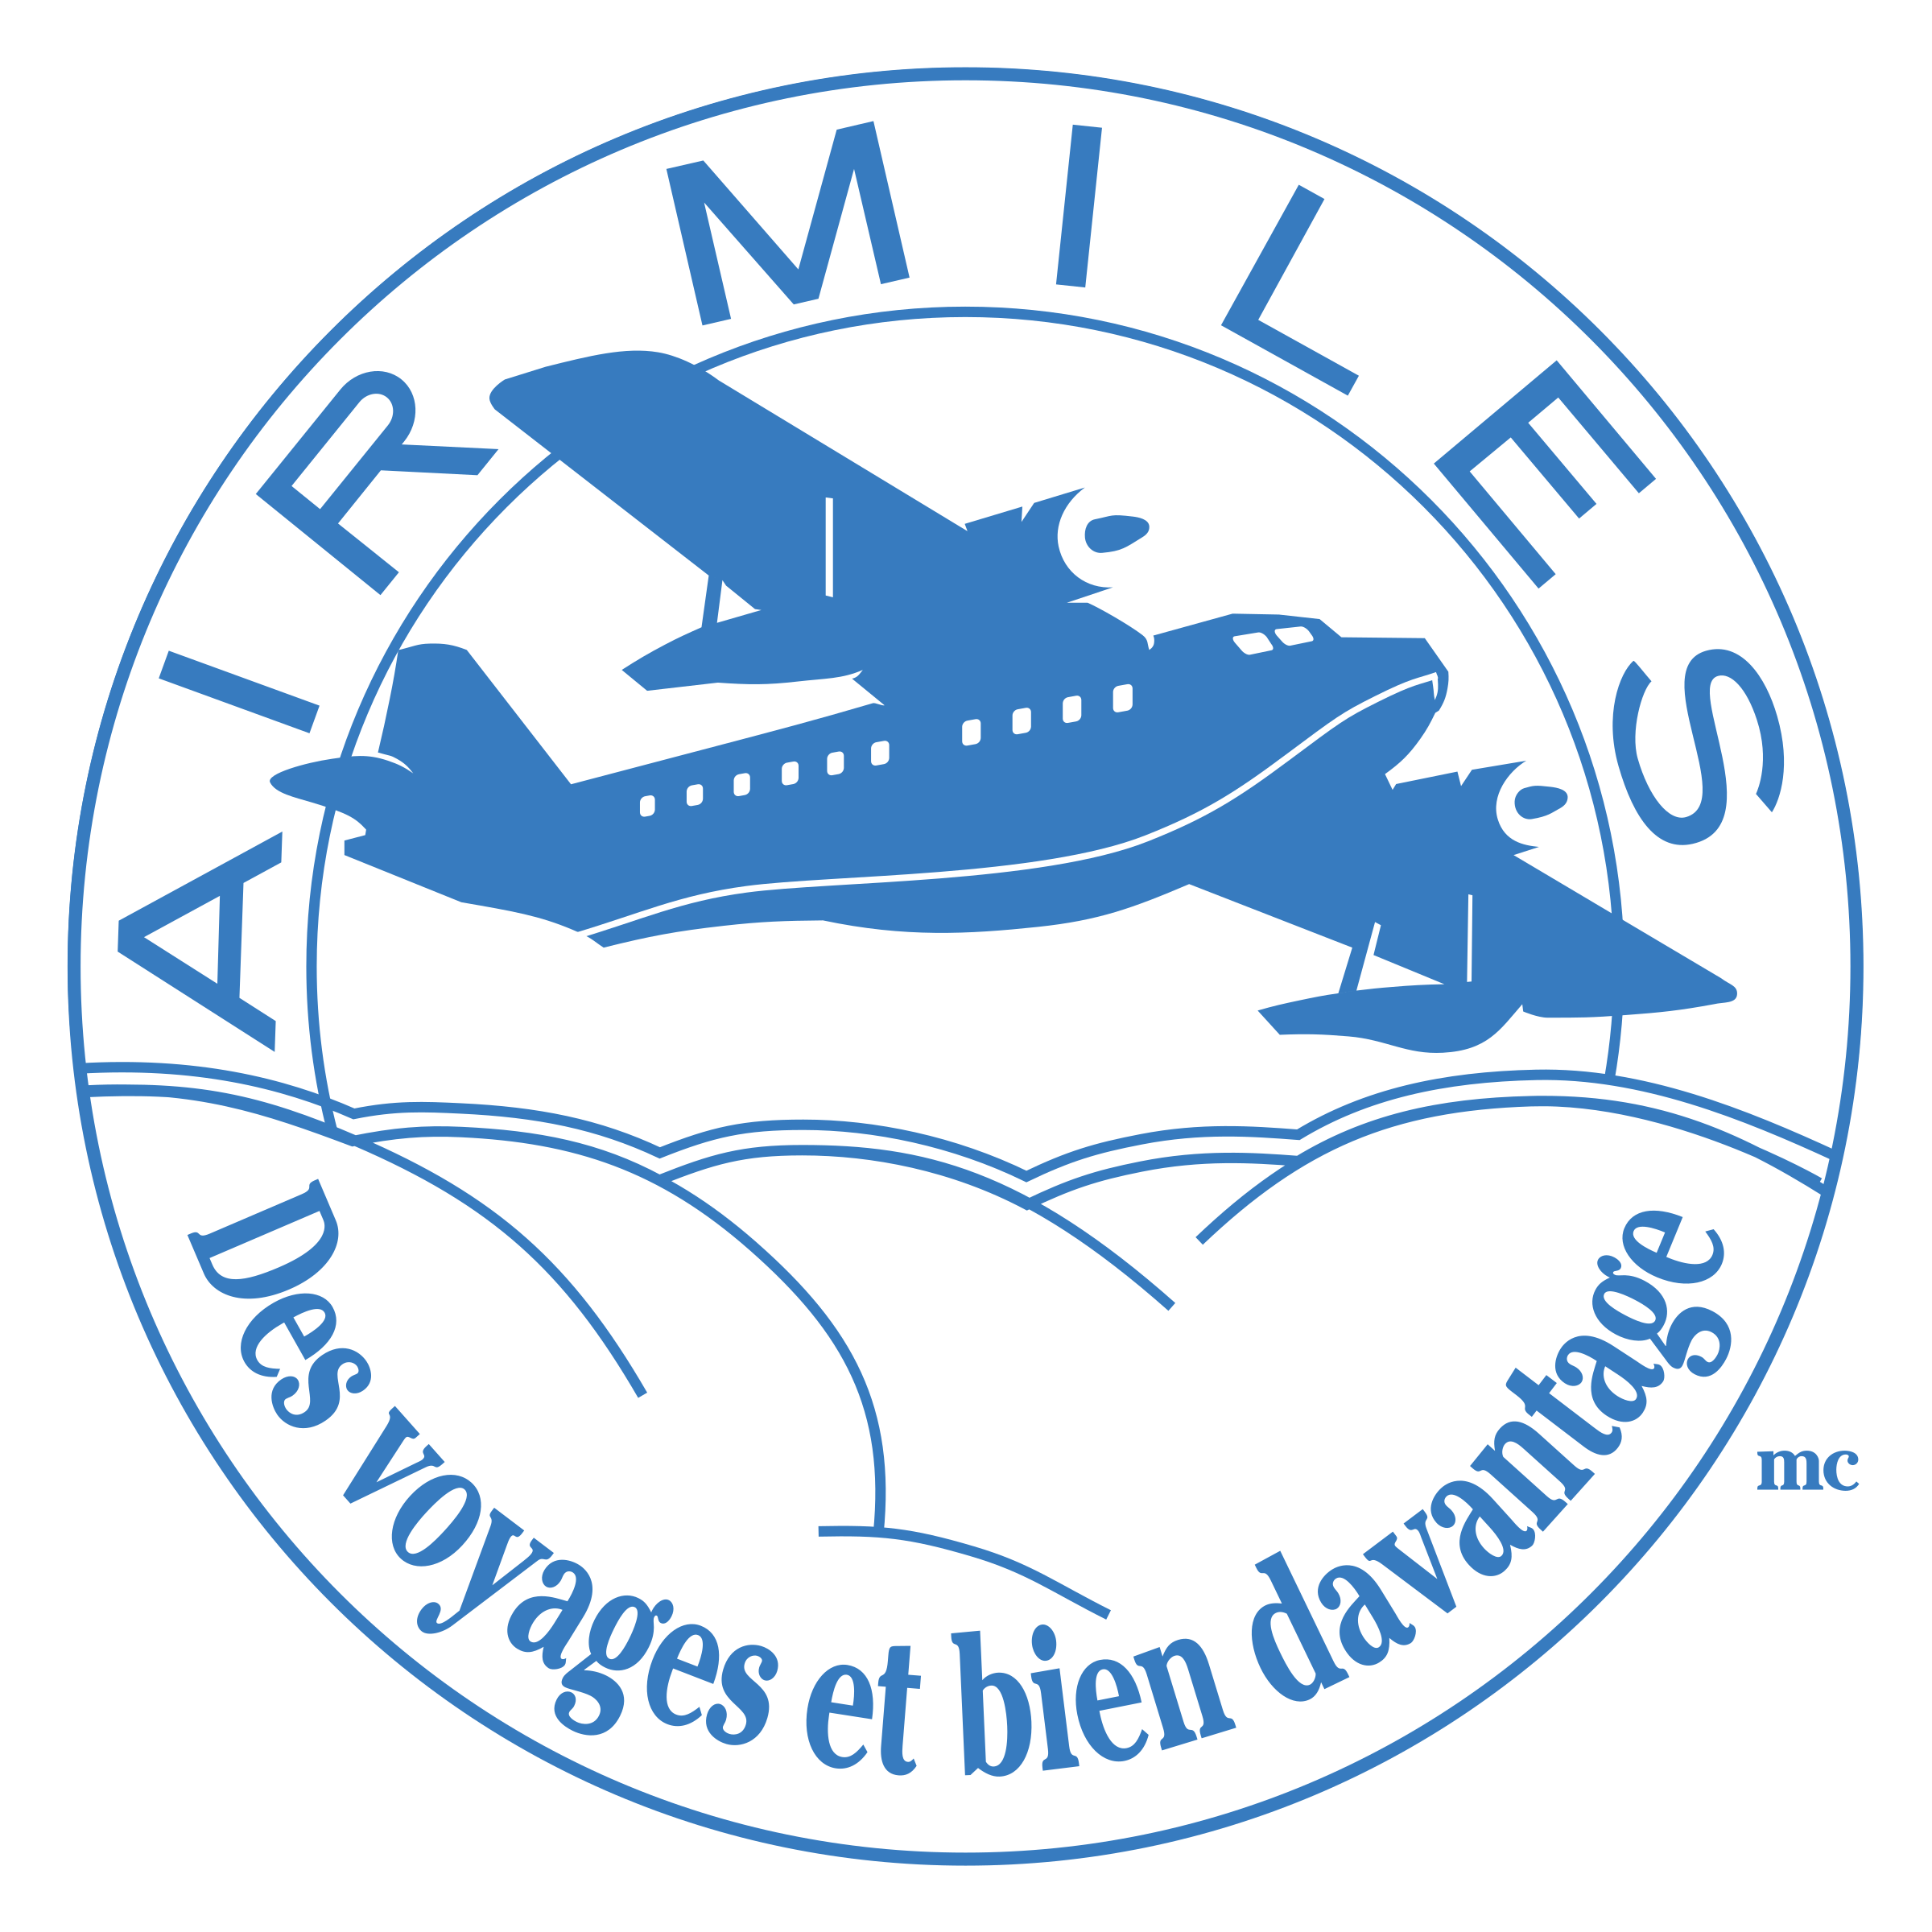 Air Miles Logo - Air Miles Logo PNG Transparent & SVG Vector - Freebie Supply